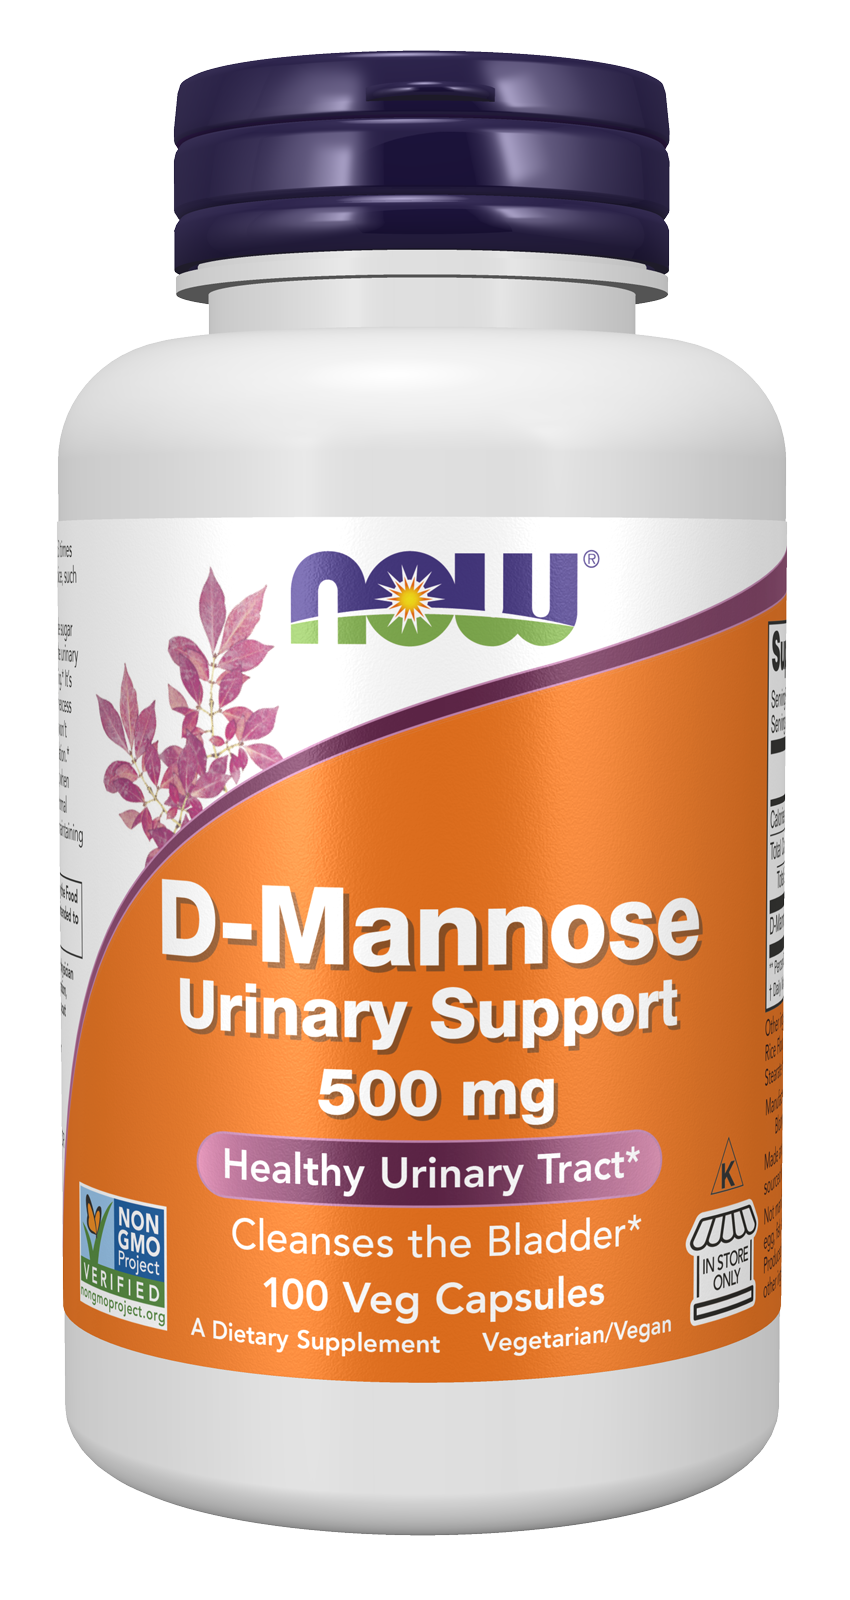 D-Mannose 500 mg - 100 Veg Capsules Bottle Front